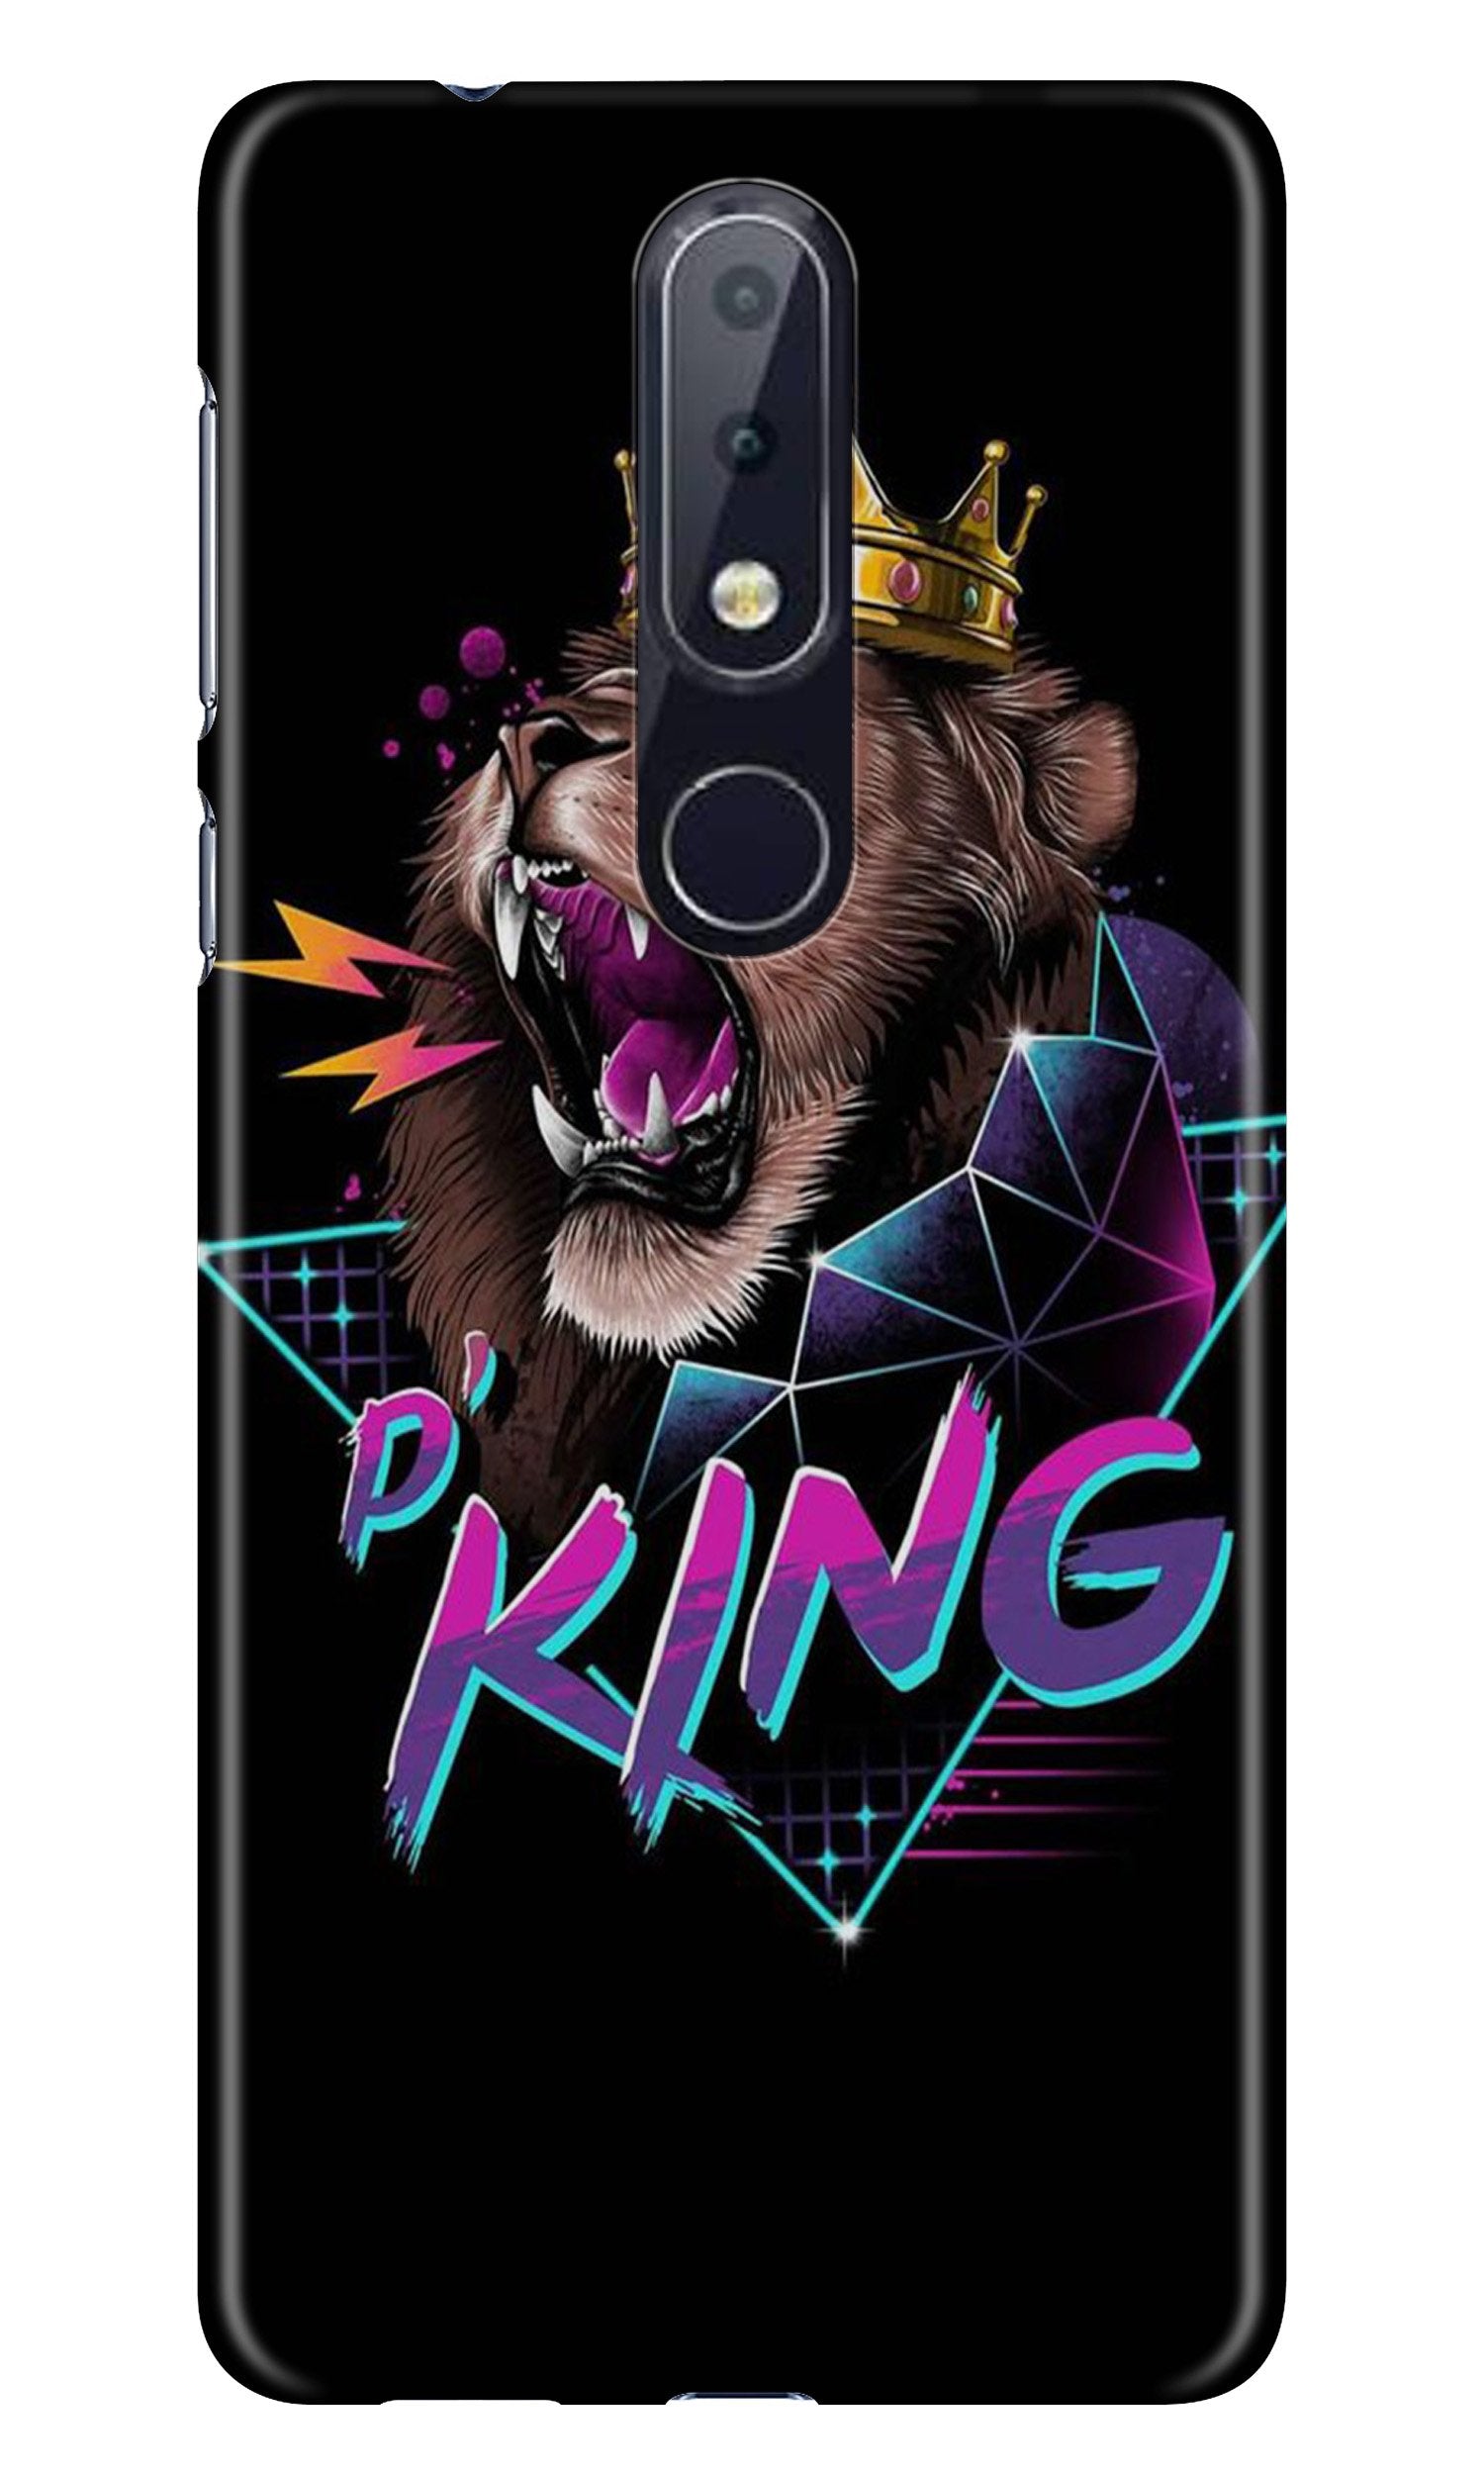 Lion King Case for Nokia 6.1 Plus (Design No. 219)